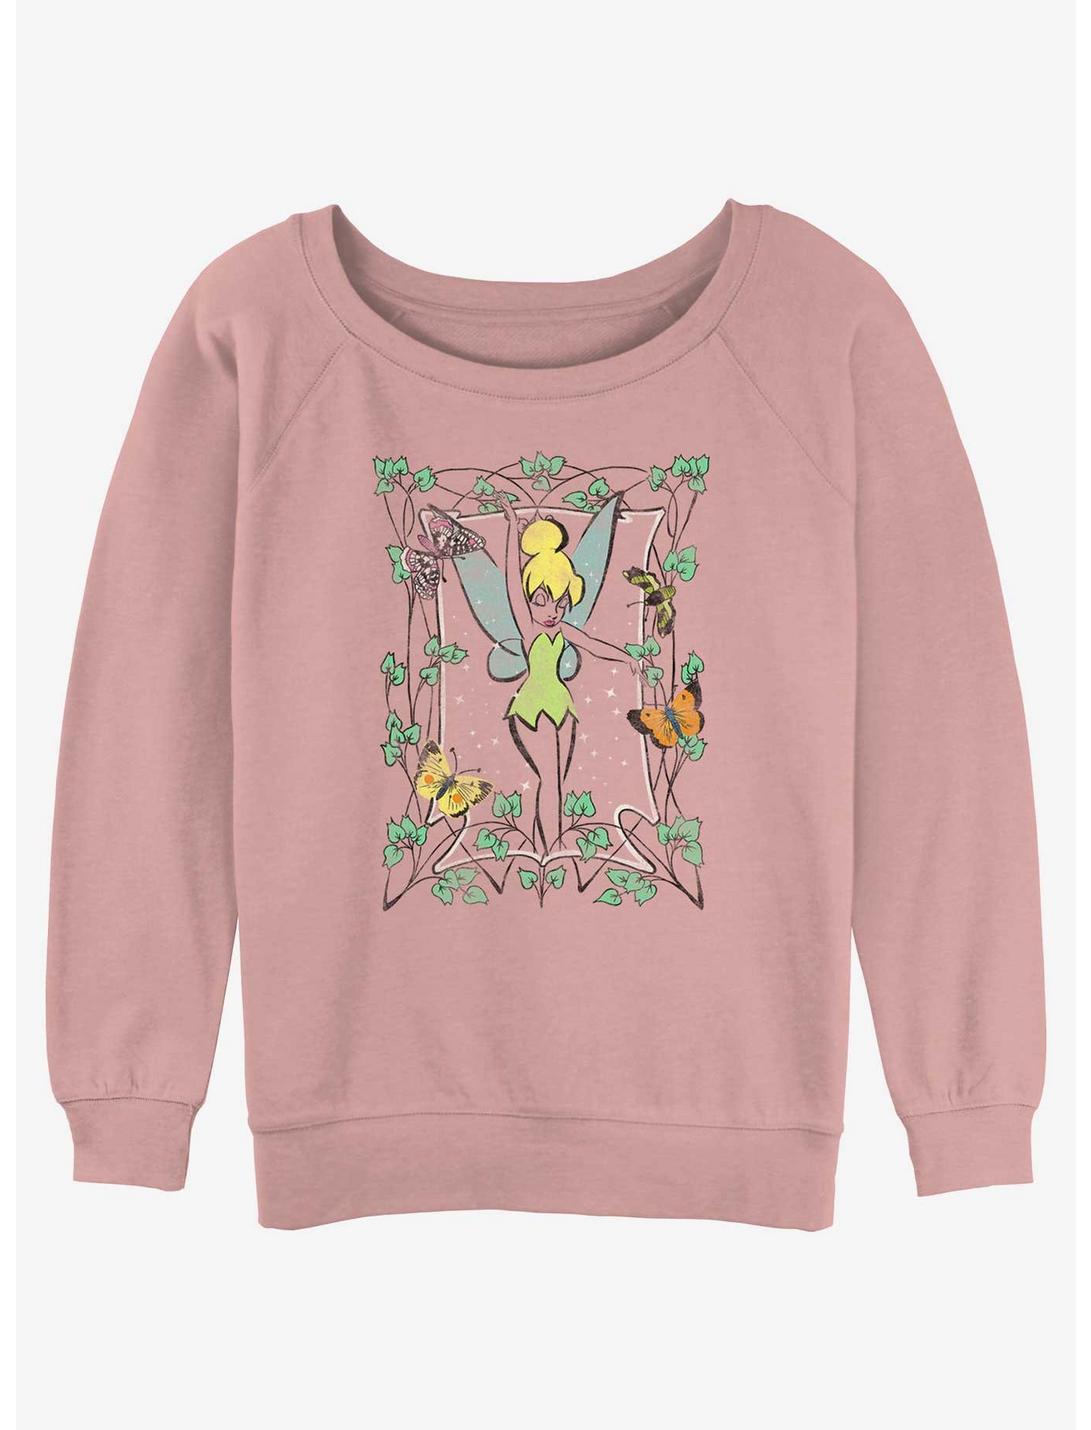 Disney Tinker Bell Framed Fairy Girls Slouchy Sweatshirt, DESERTPNK, hi-res